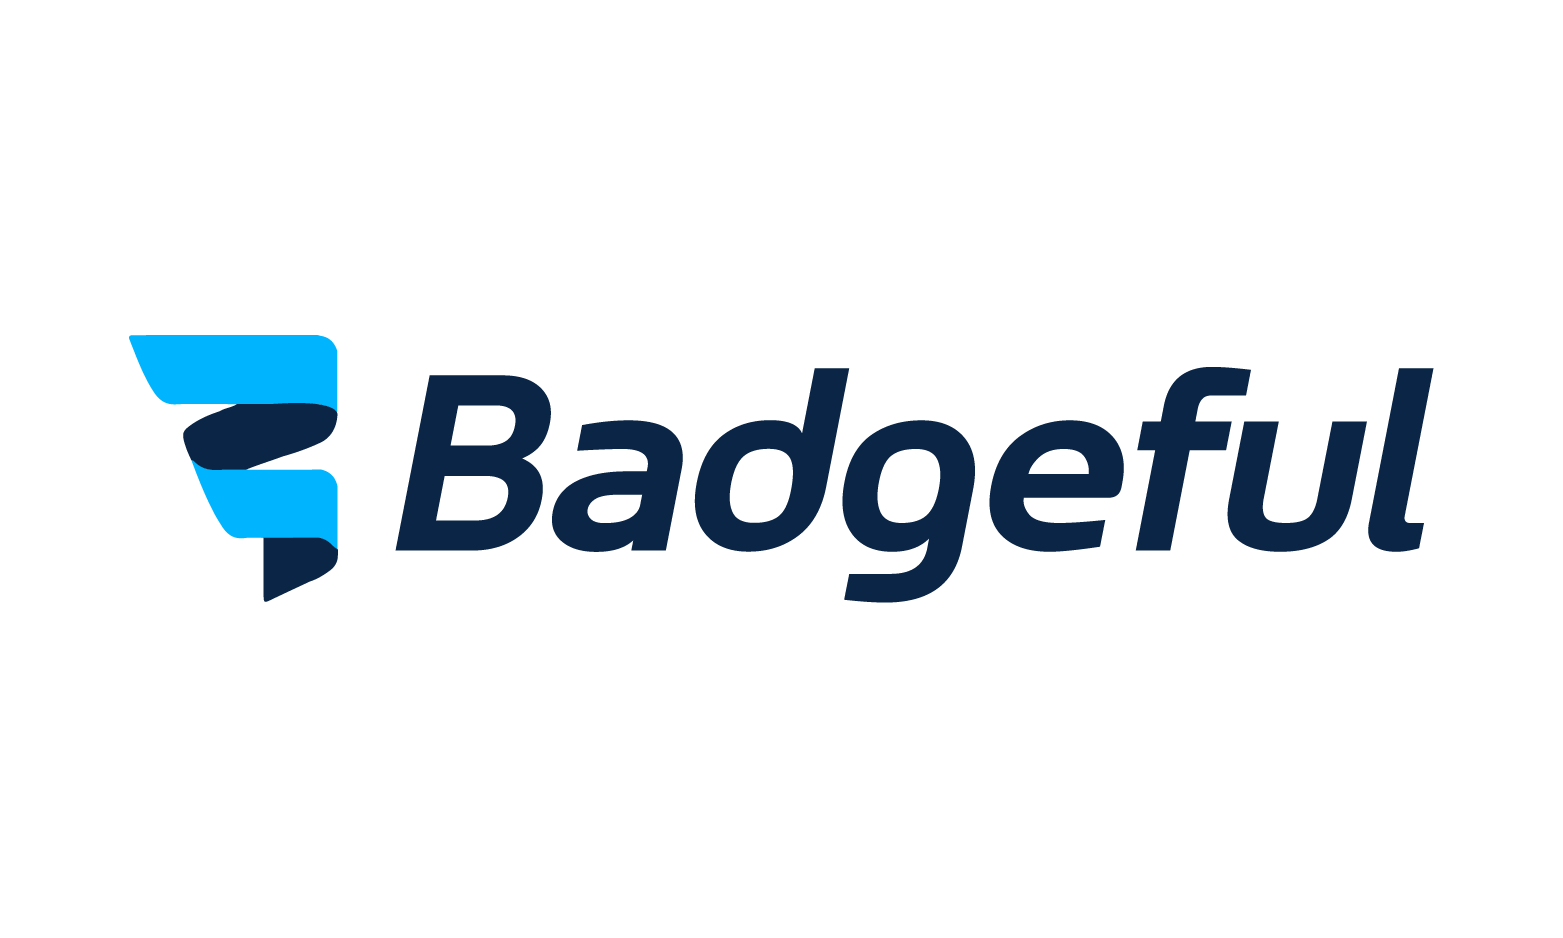 Badgeful.com - Creative brandable domain for sale